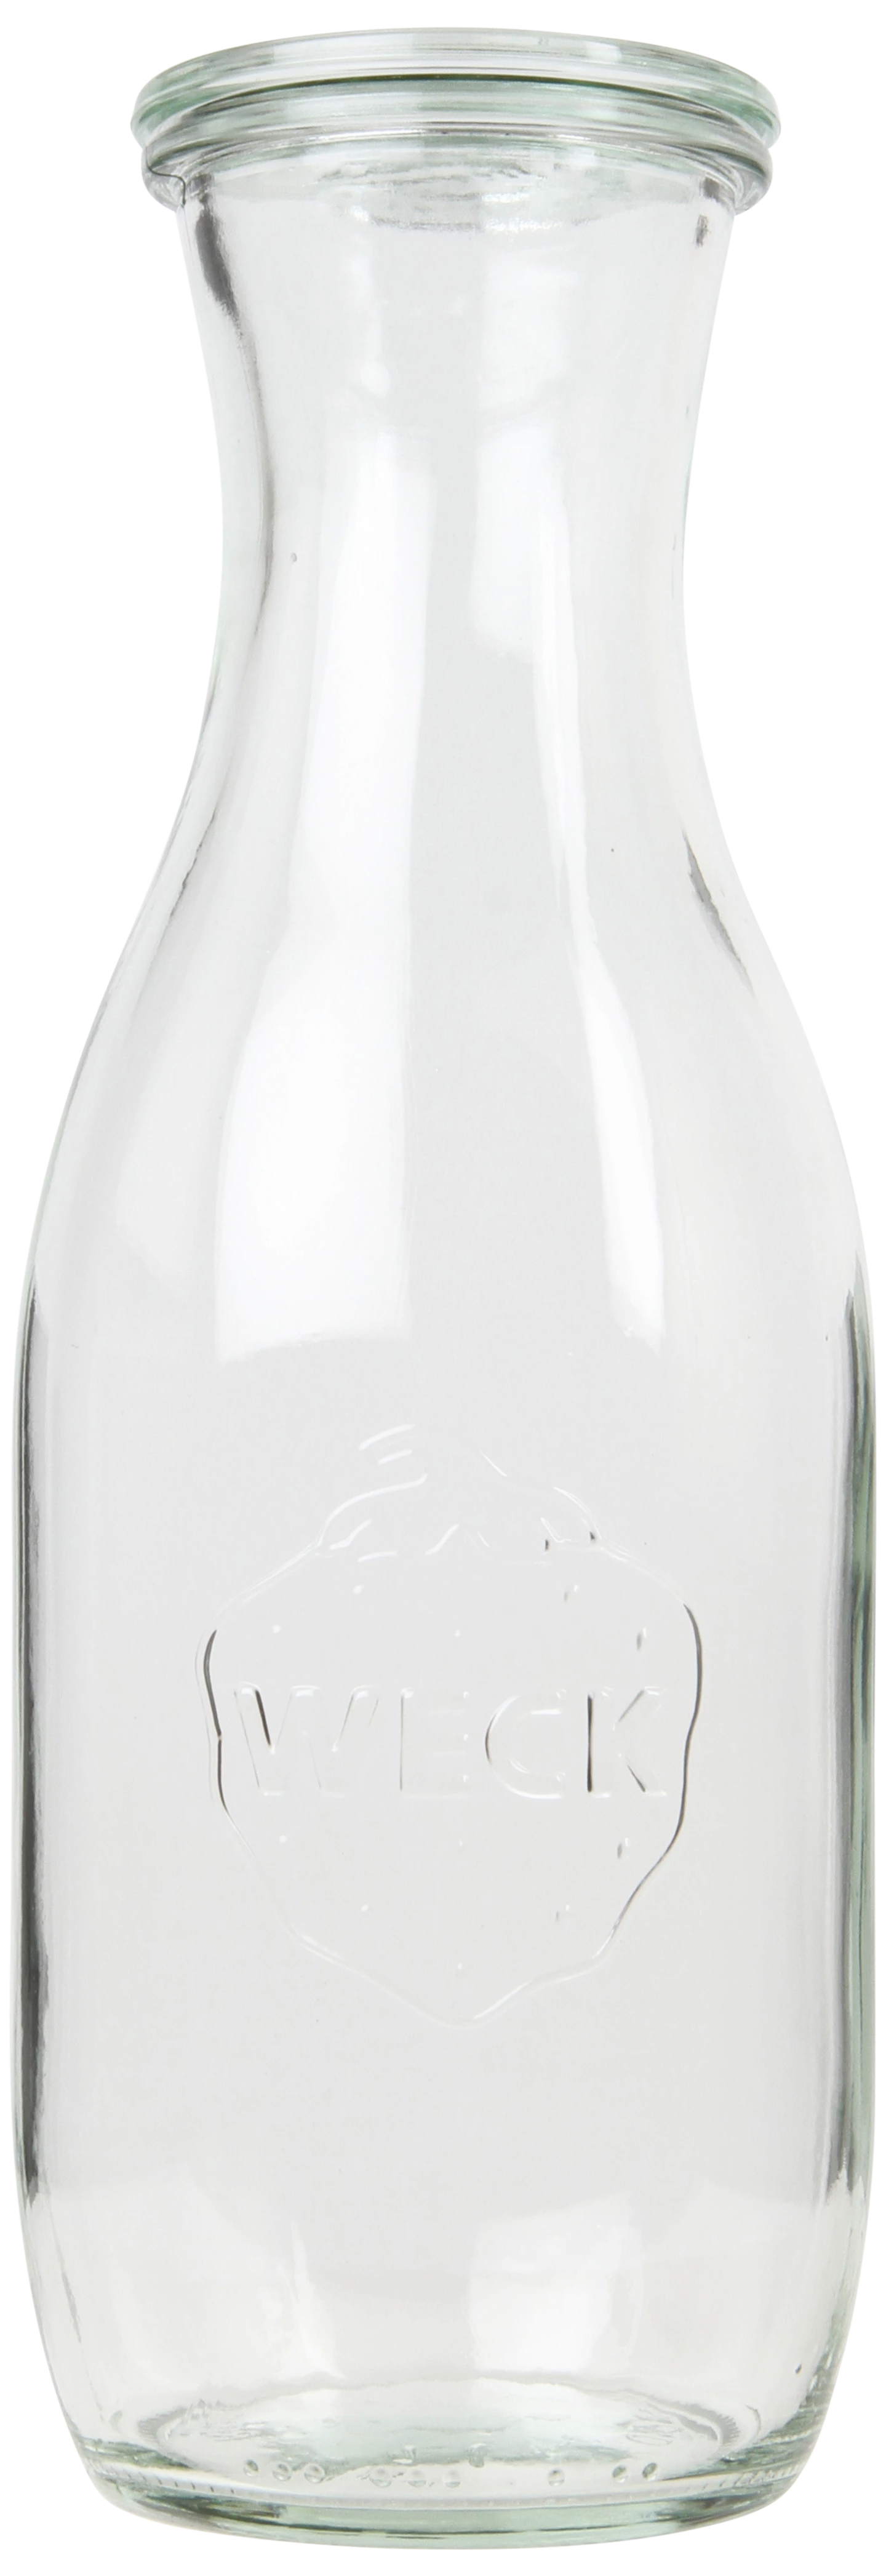 Løgismose Grej Weck Saftflaske 1L (766)  - 6 stk mlåg 60mm - 127388